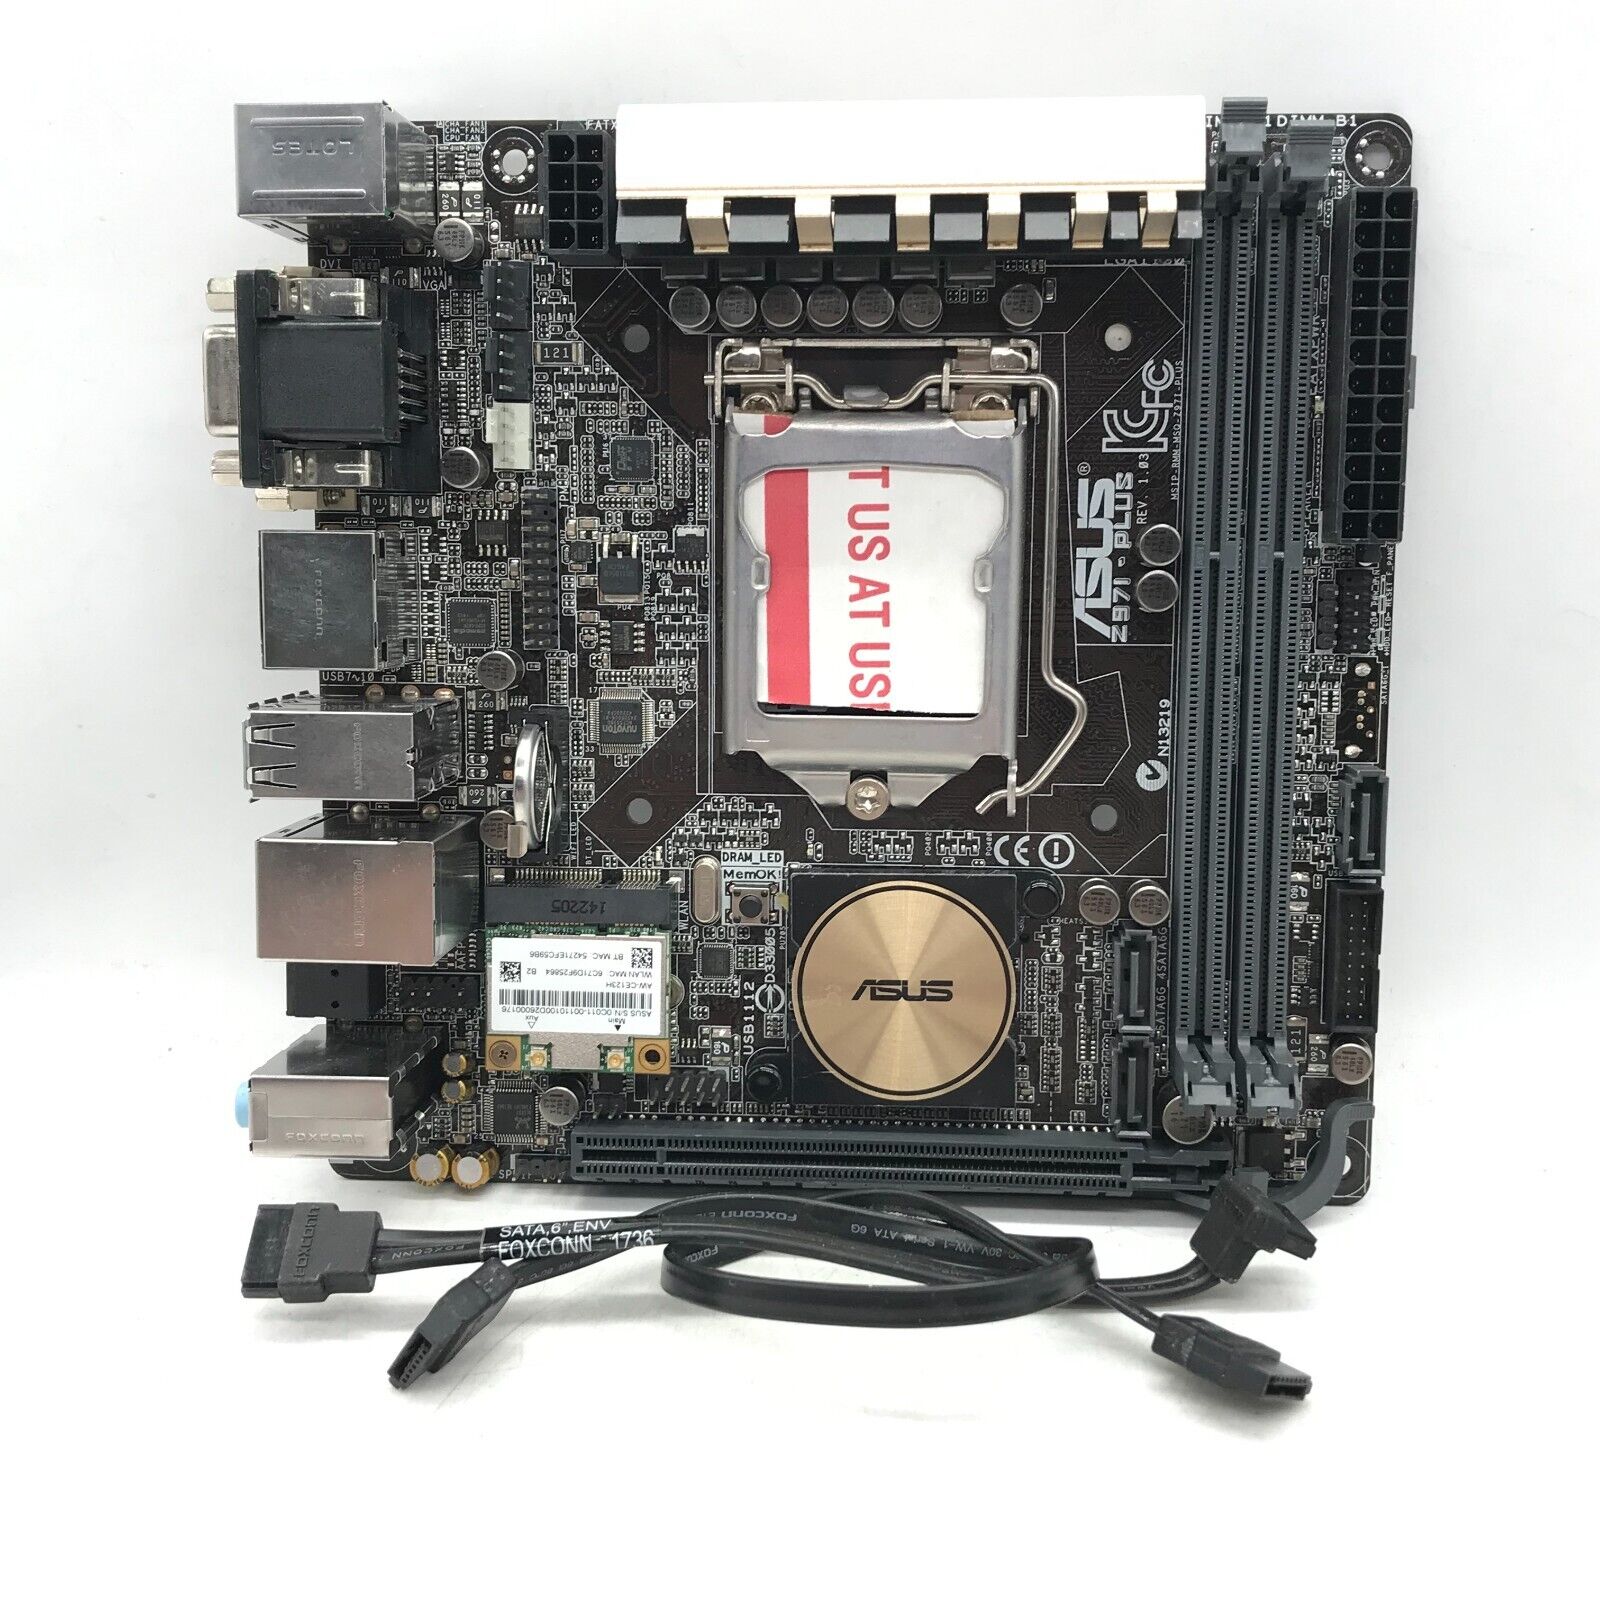 ASUS Z97I-PLUS Motherboard Intel Z97 (4th Gen) LGA1150 DDR3 mITX